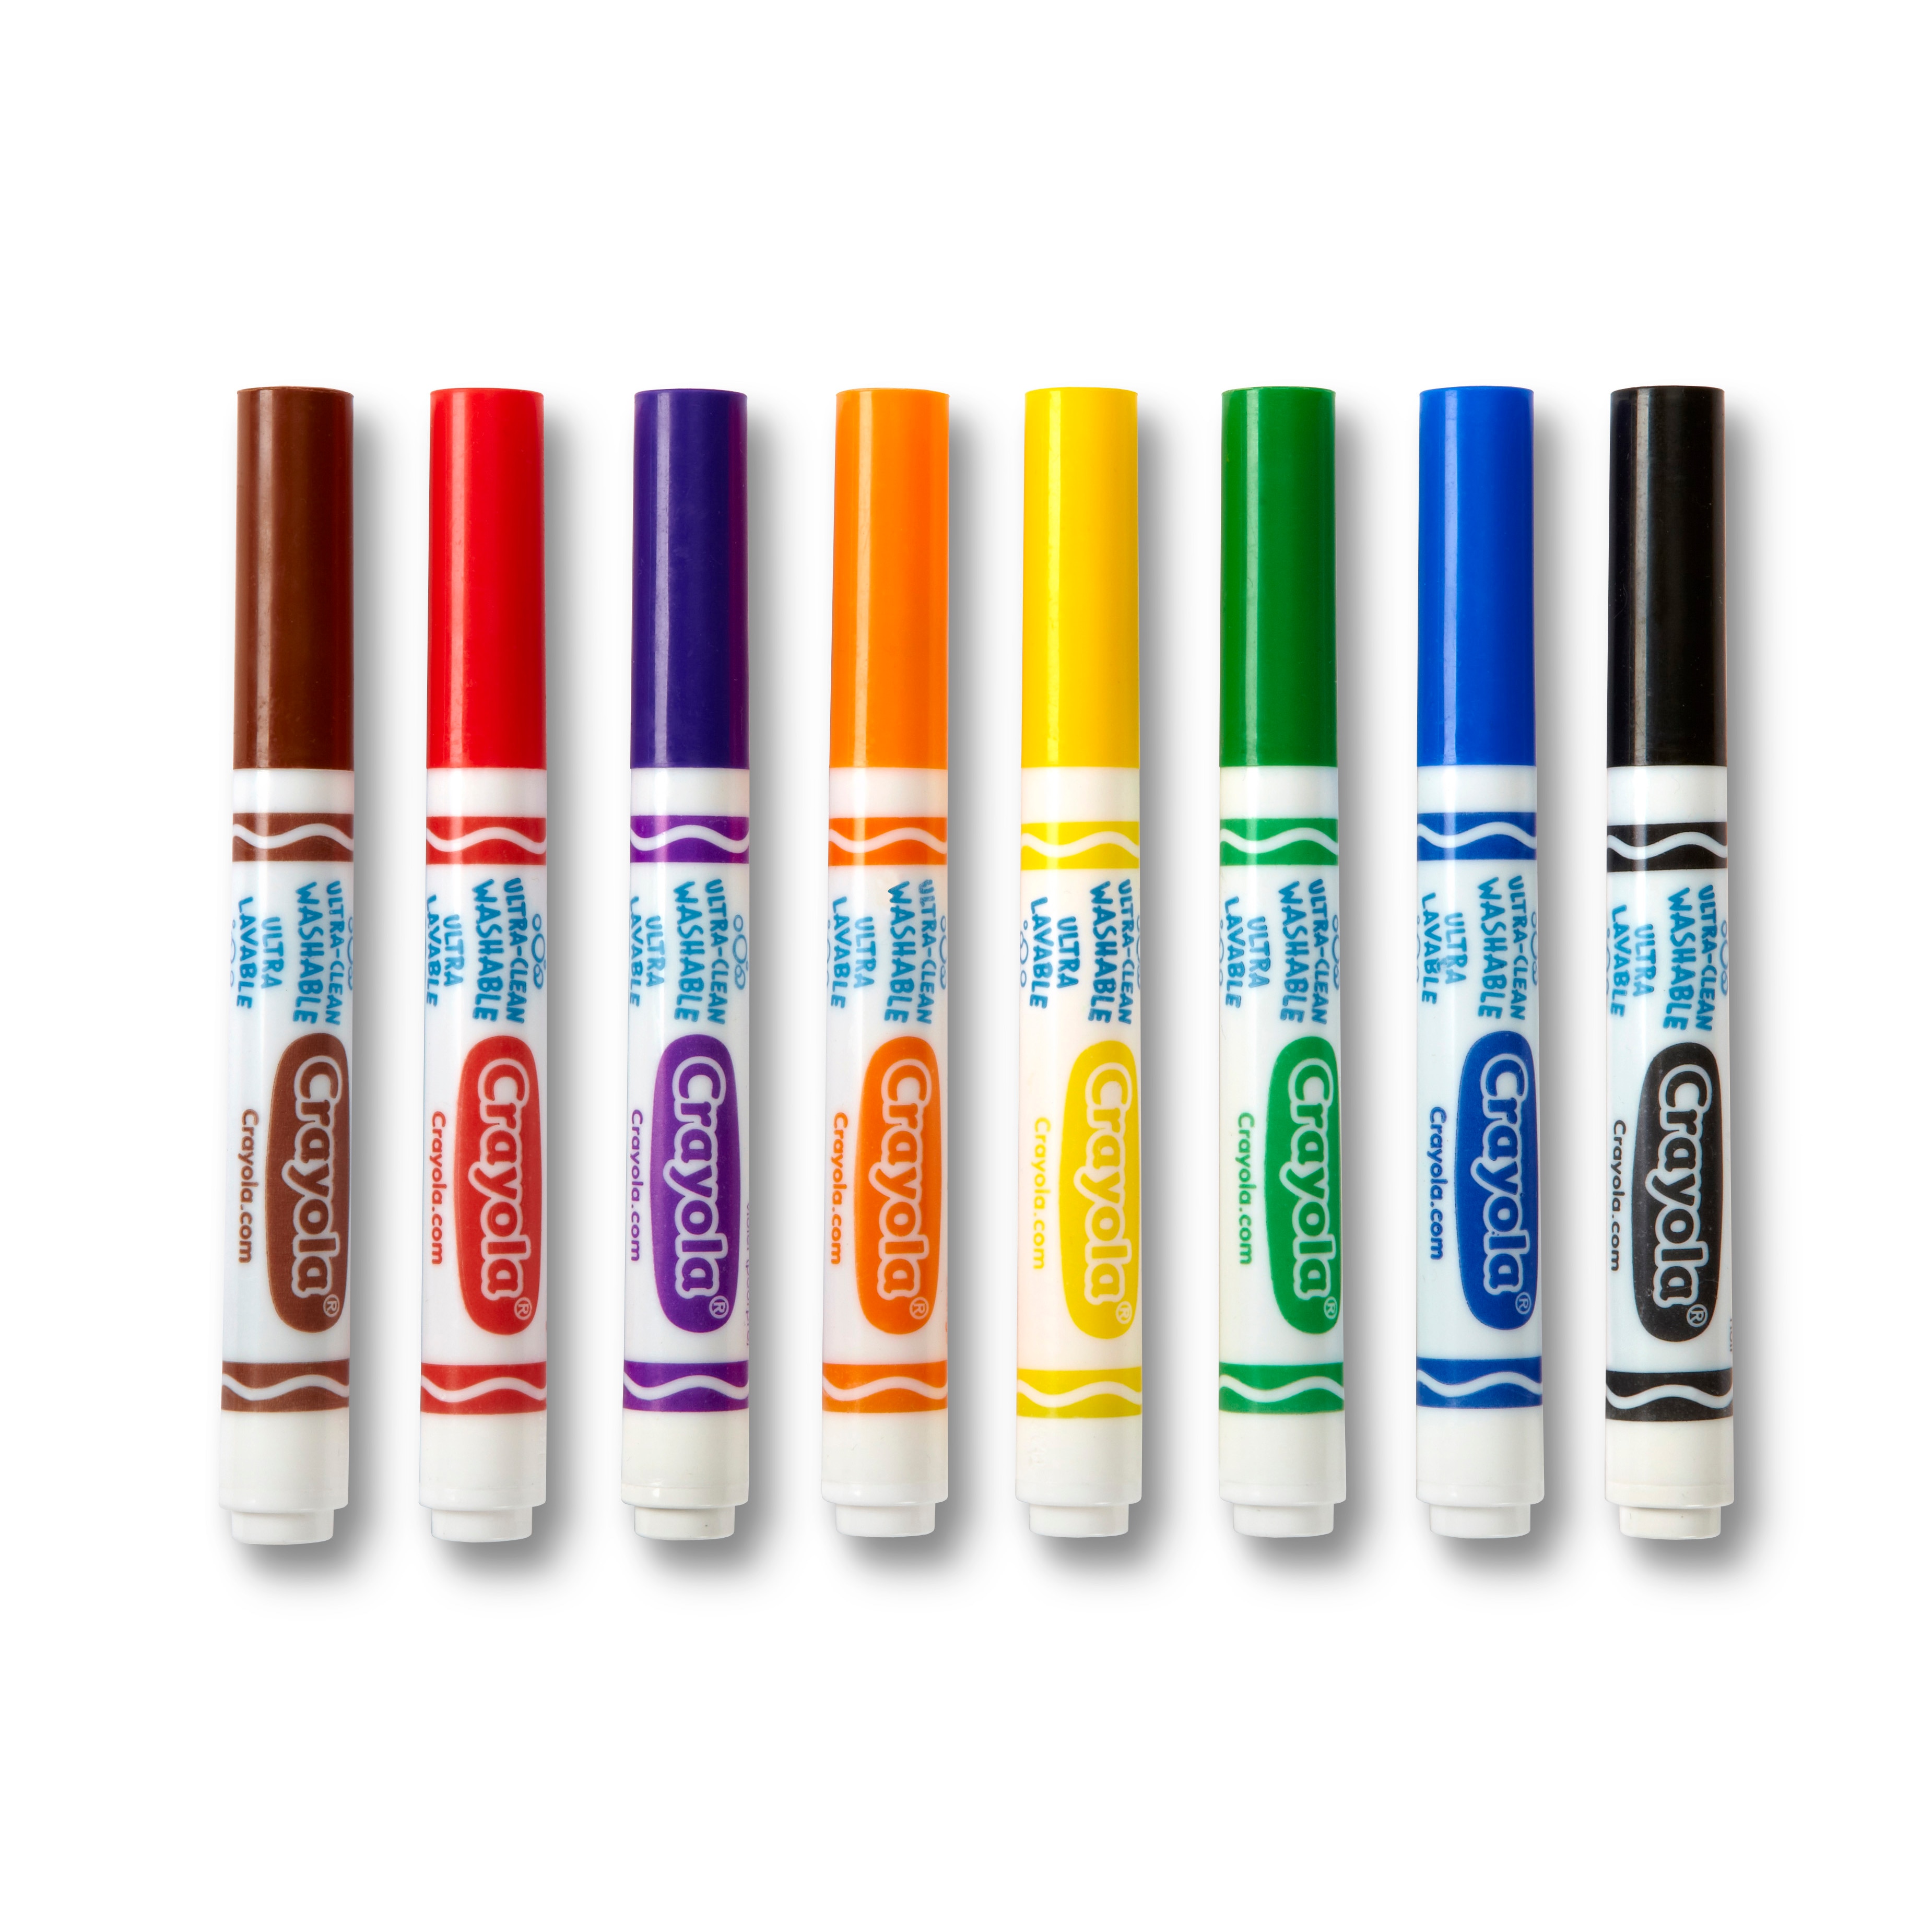 Crayola Washable Marker Set, 8-Colors, Broad, Classic